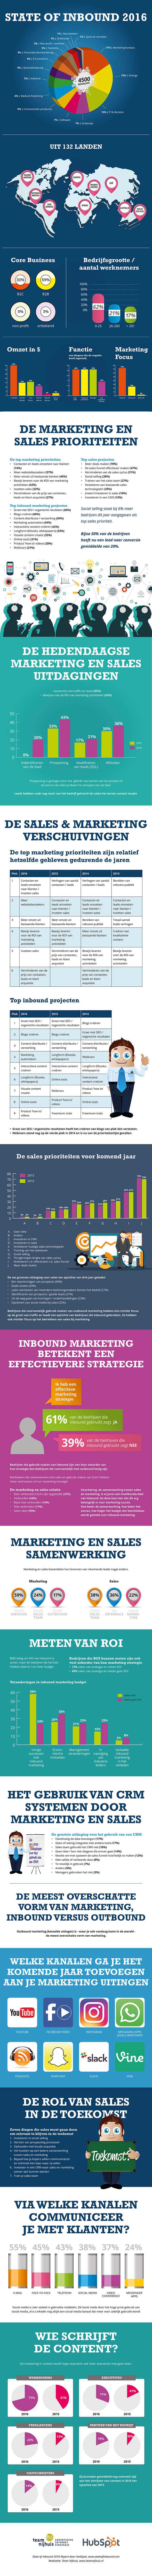 infographic State of Inbound team nijhuis